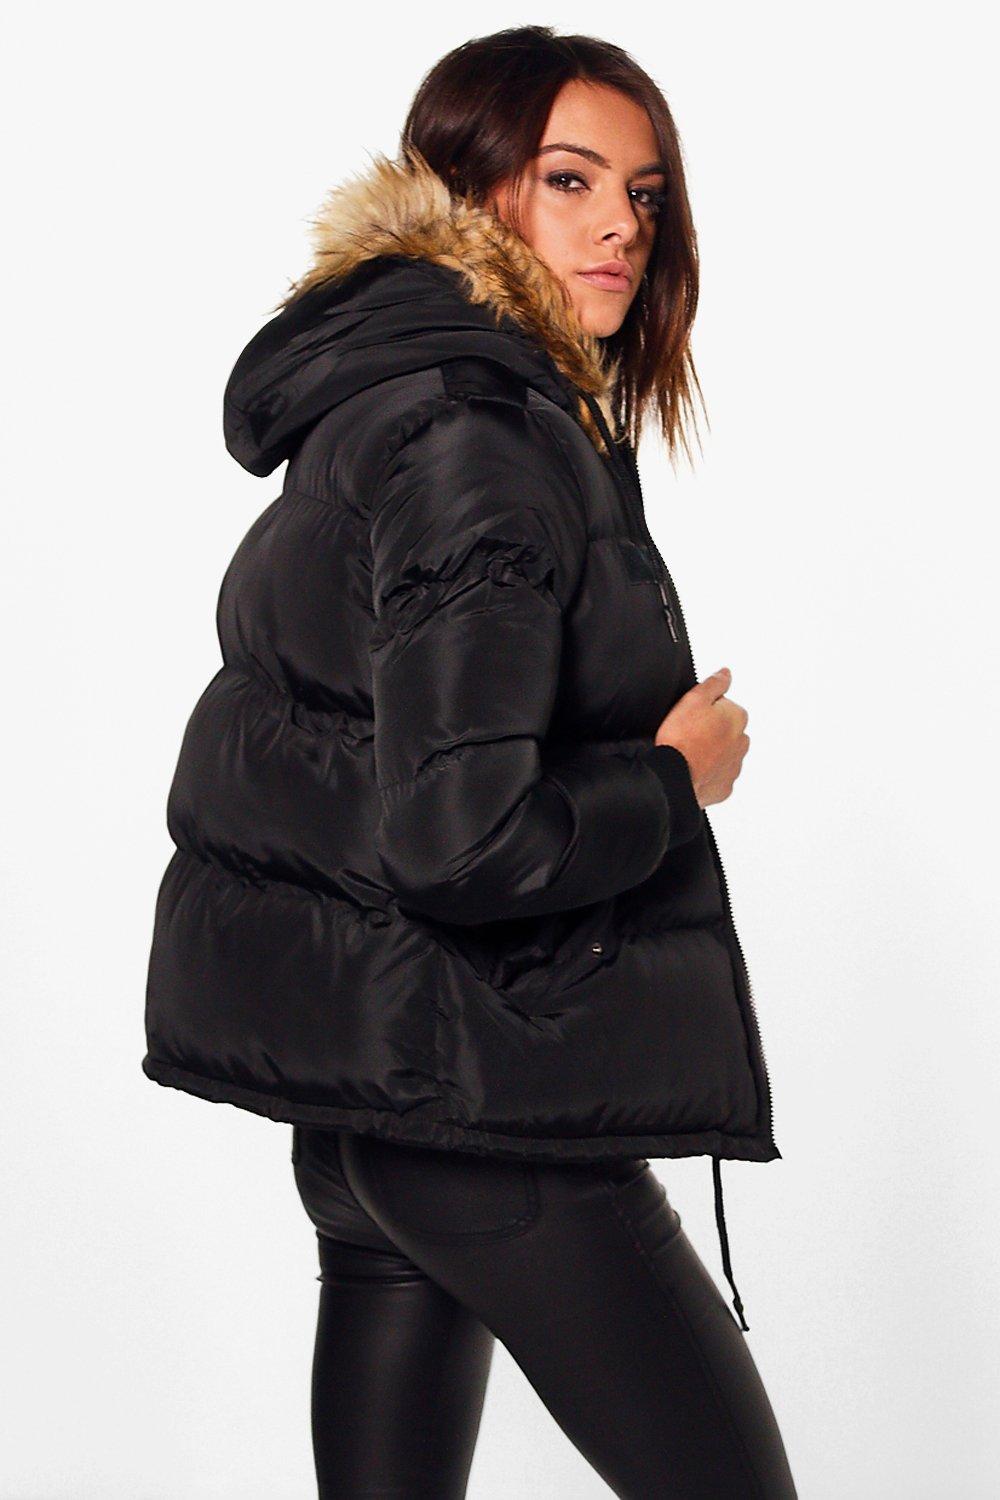 Boohoo Womens Libby Crop Padded Jacket With Faux Fur Hood | eBay